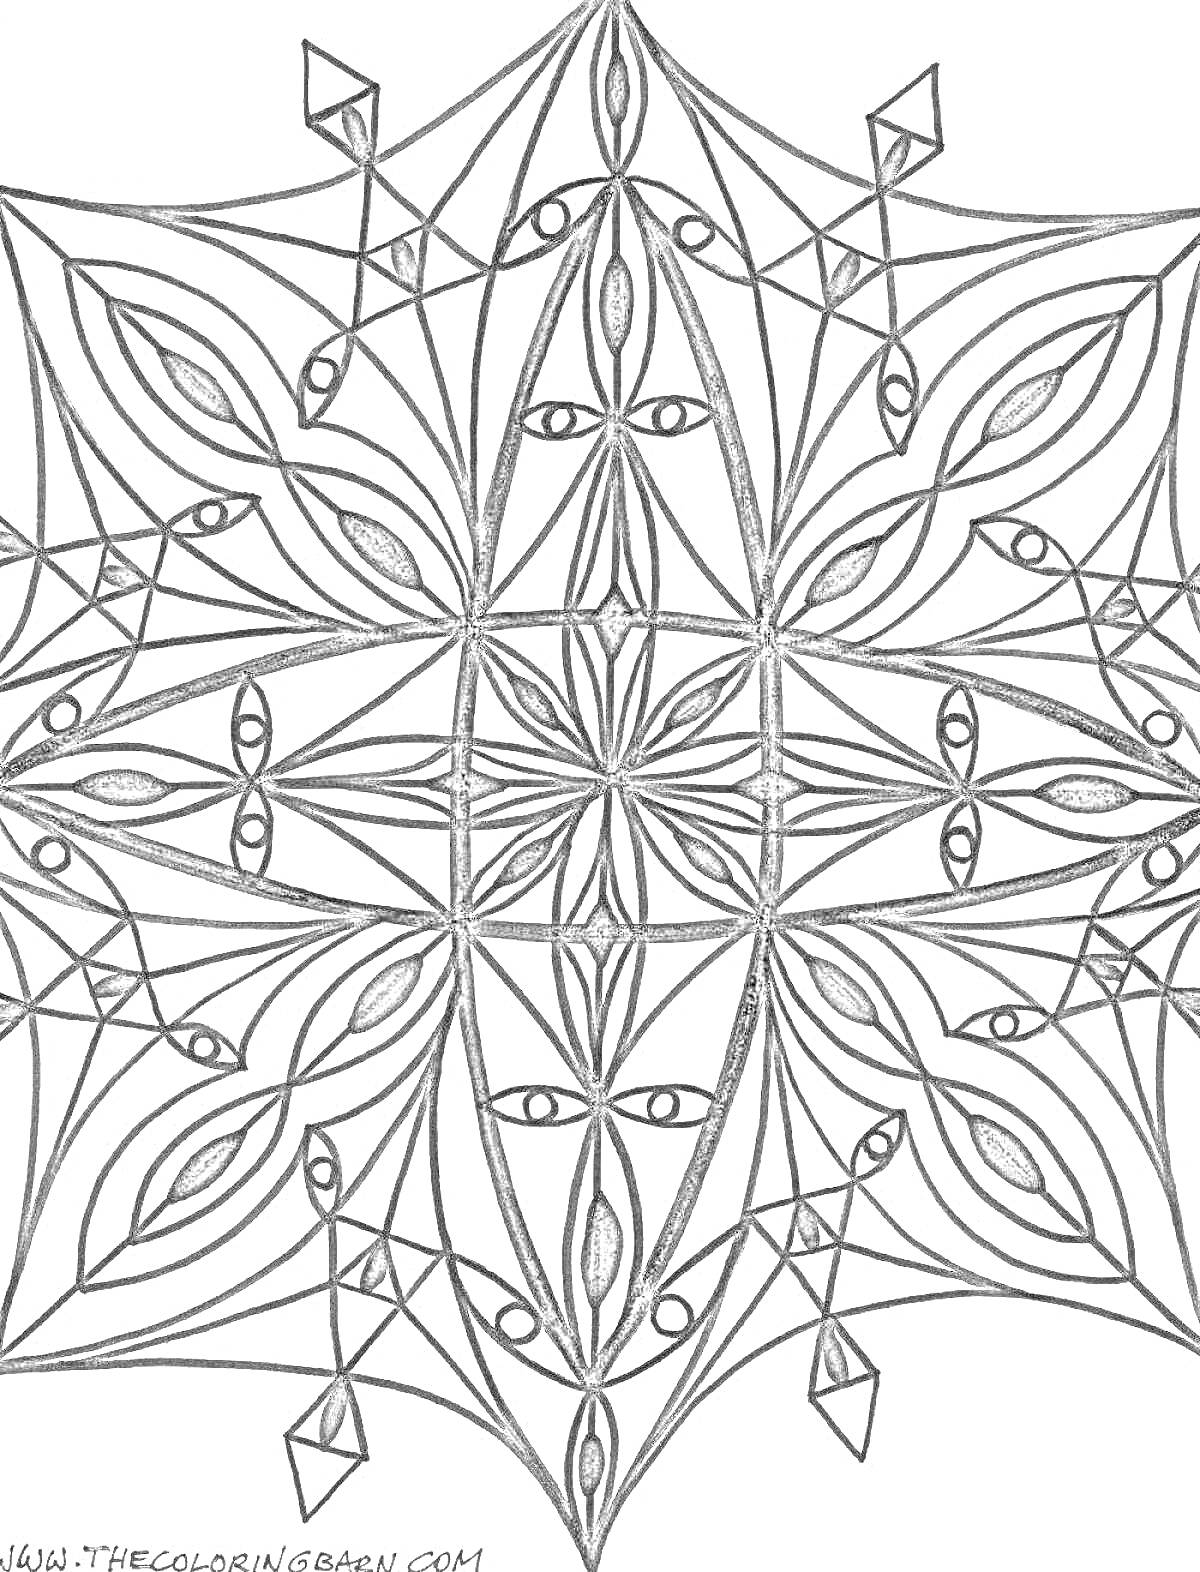 Раскраска Калейдоскоп с фигурами лепестков, овалами и геометрическими узорами